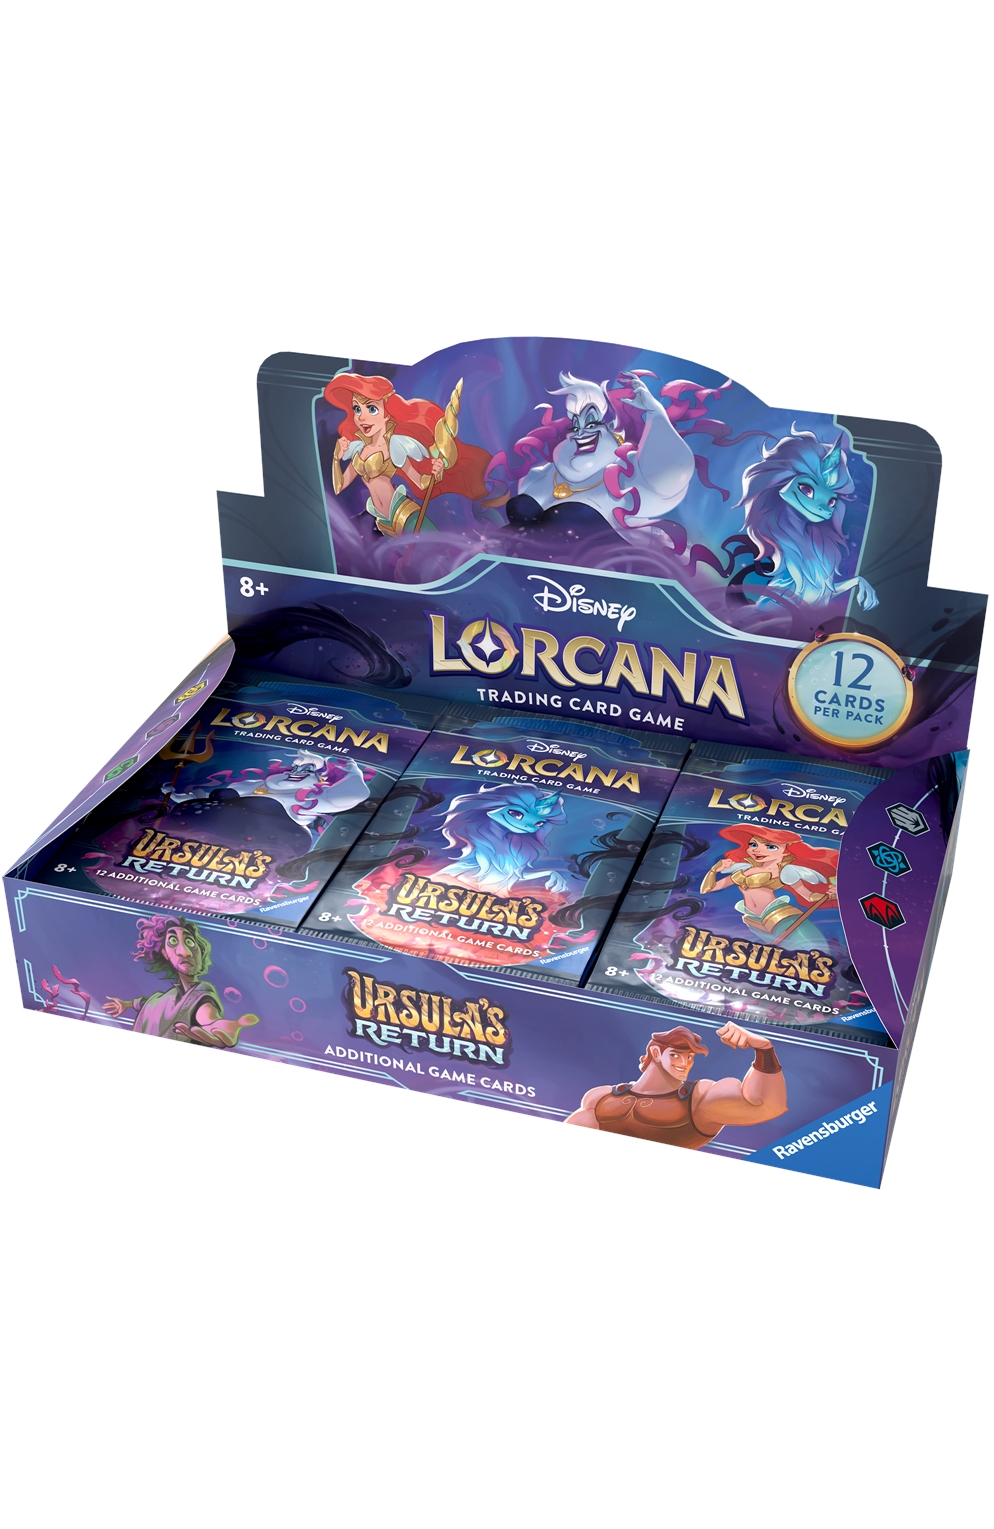 Disney Lorcana Tcg: Ursula's Return Booster Box (24)